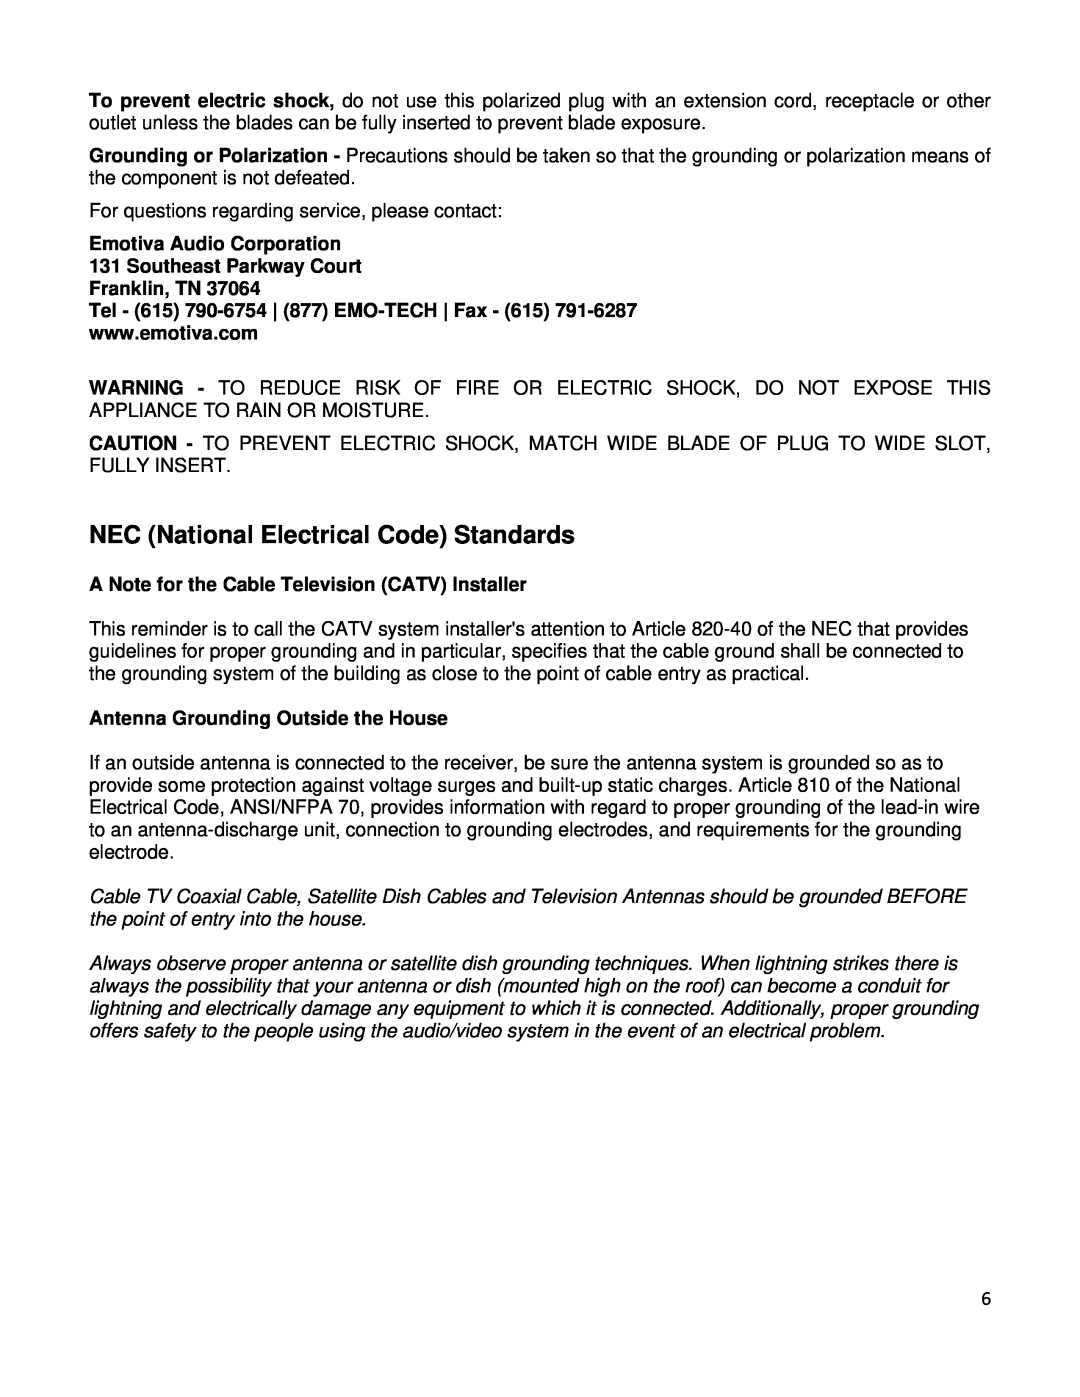 Emotiva USP-1 NEC National Electrical Code Standards, Emotiva Audio Corporation, Southeast Parkway Court Franklin, TN 